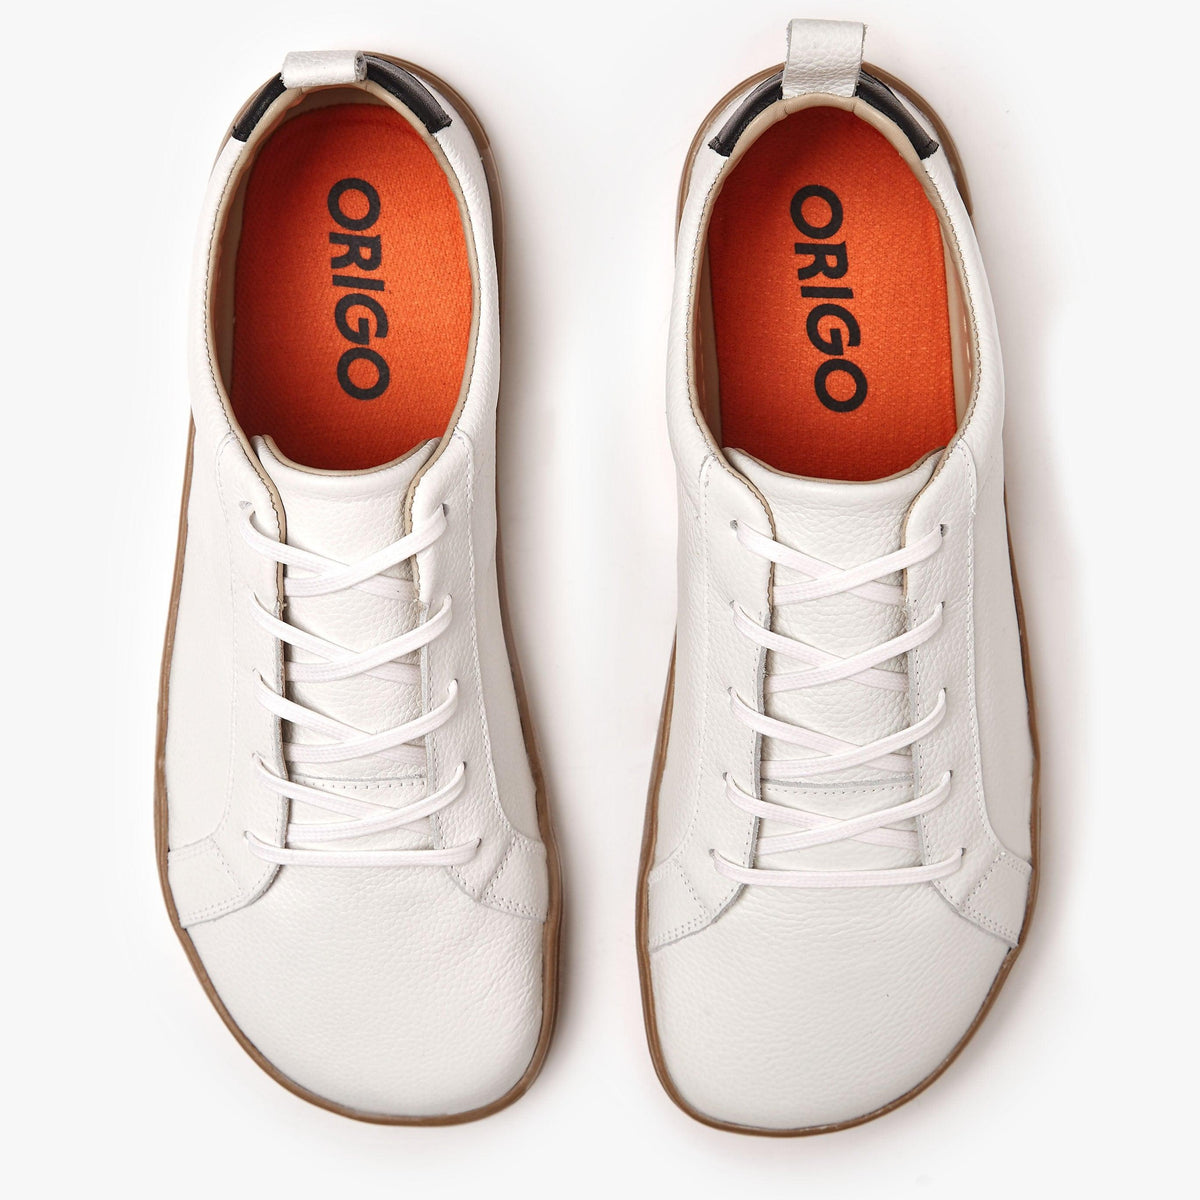 Sanders Alexander Graham Bell Ny ankomst Barefoot shoes - Men - White - Natural Leather - The Everyday Sneaker –  Origo Shoes